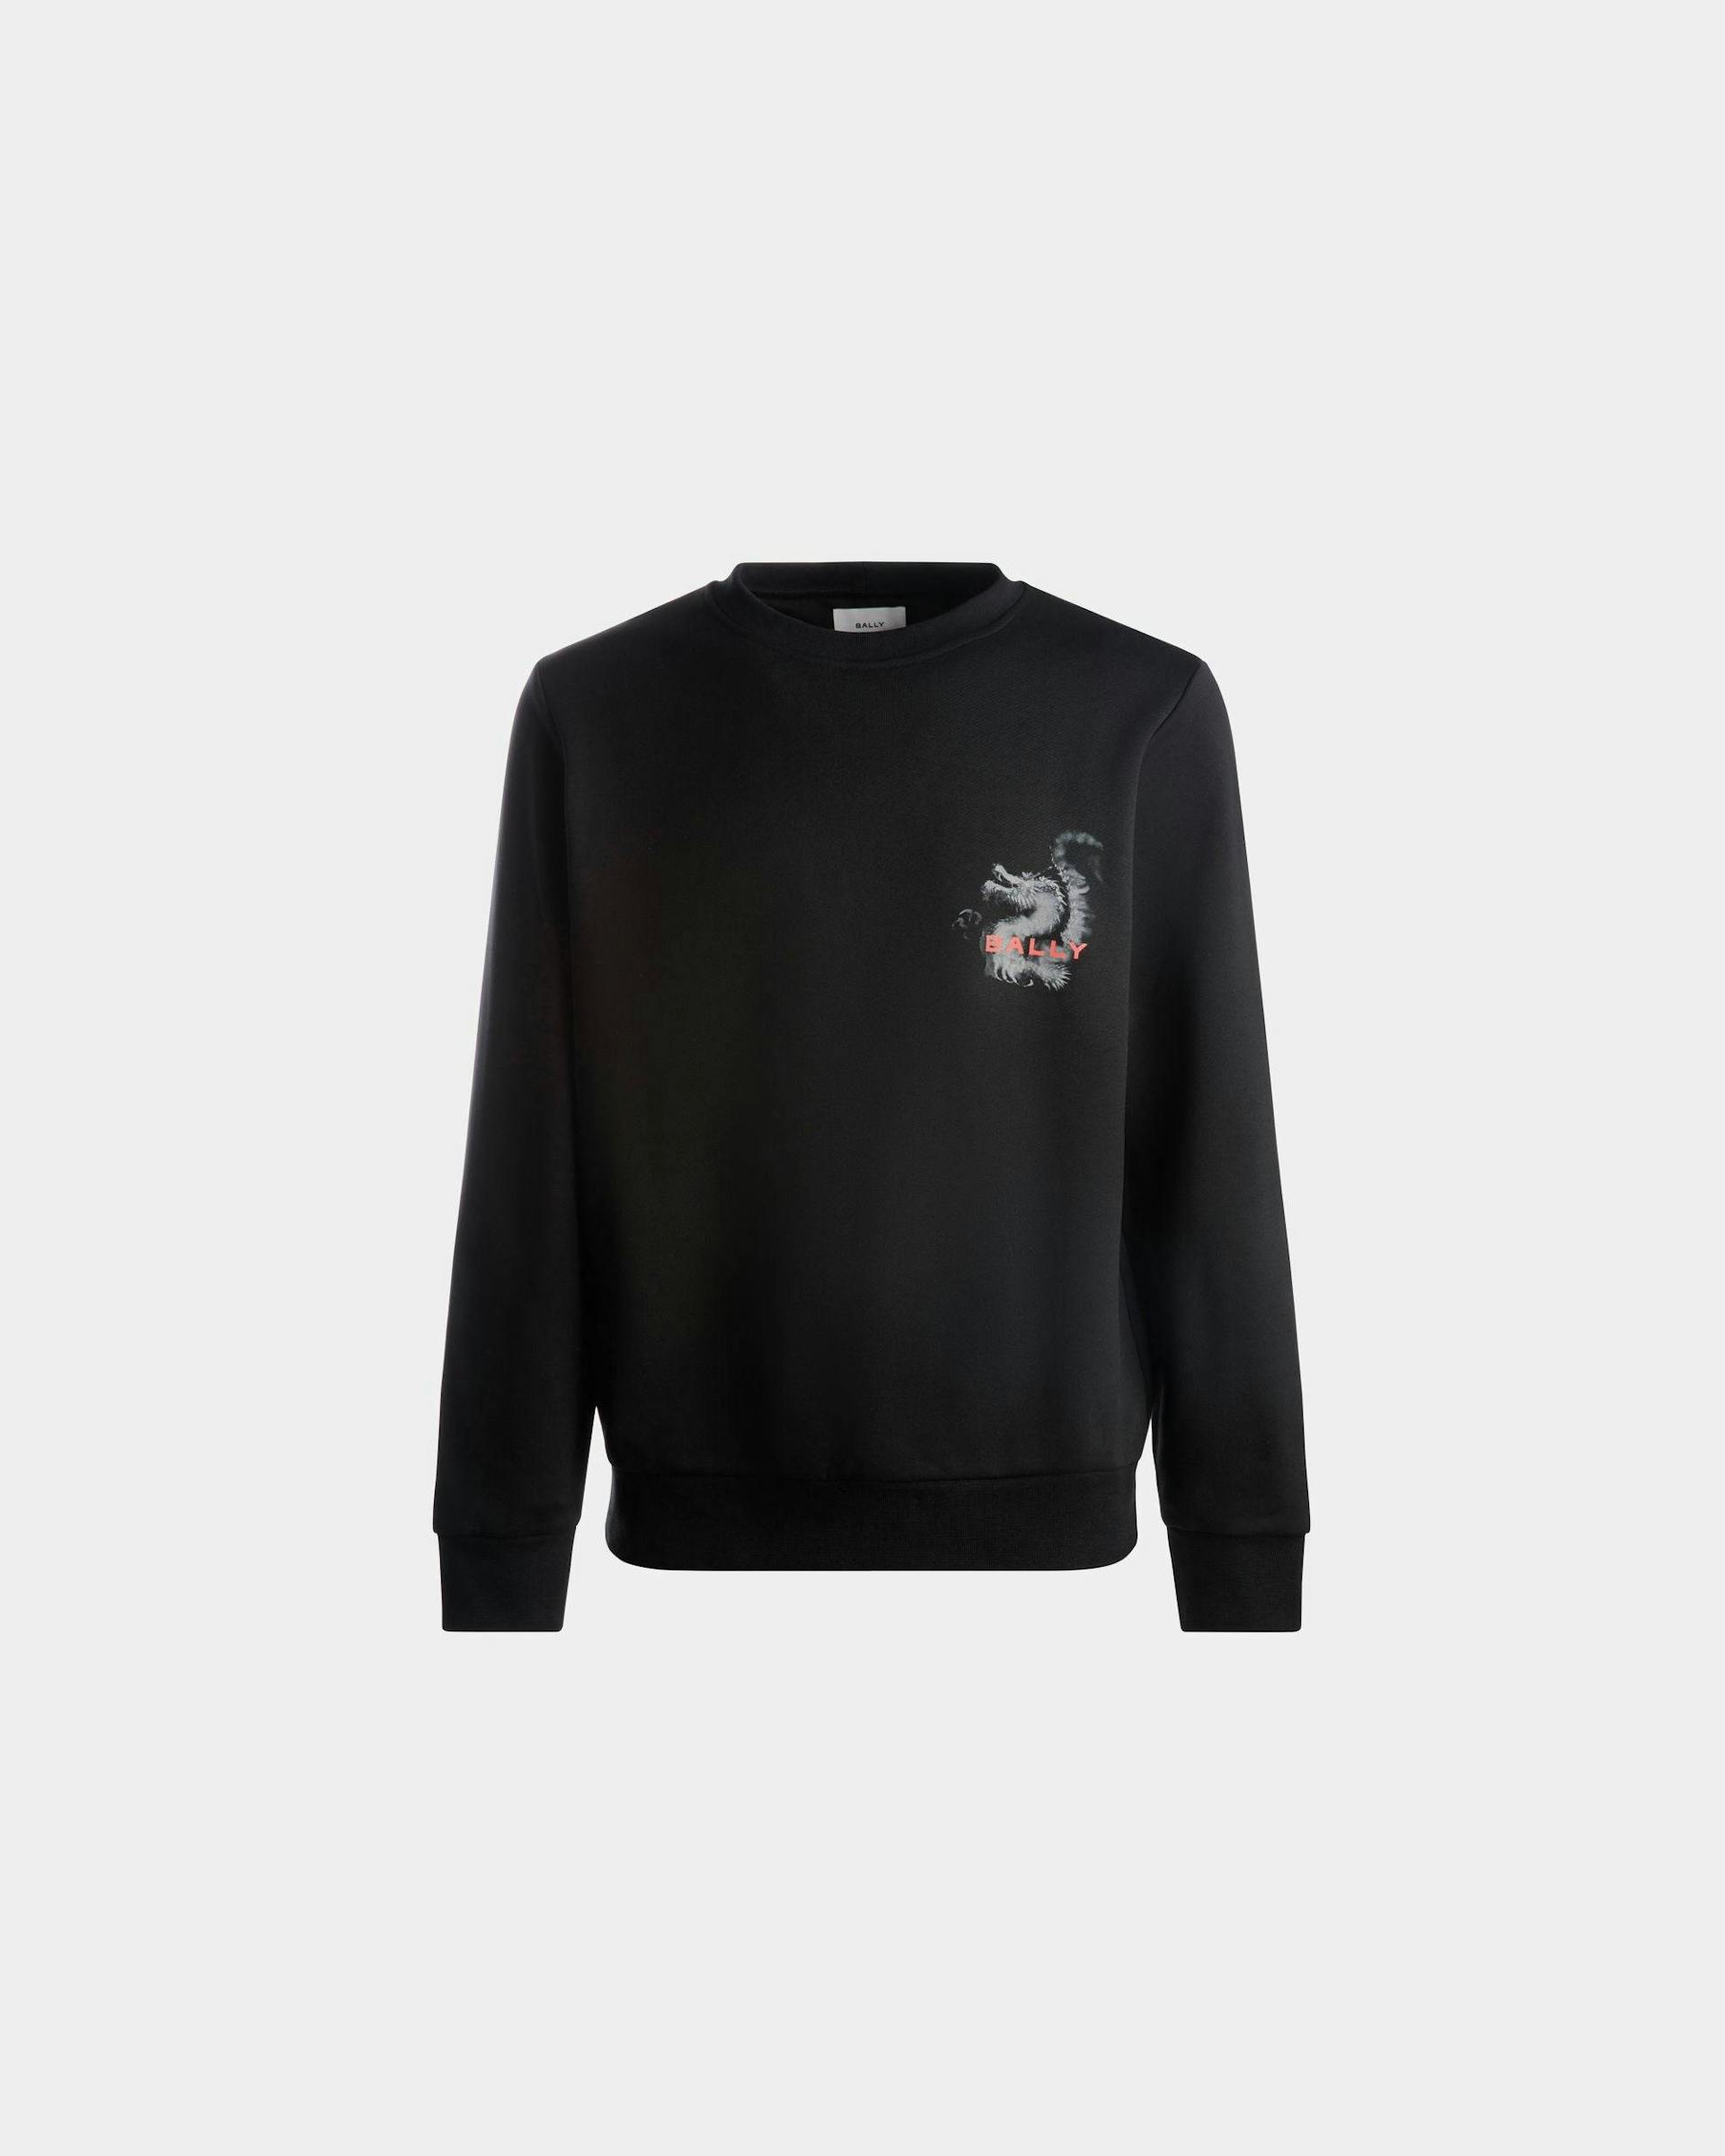 Men's Sweatshirt In Black Stretch Cotton | Bally | Still Life Front